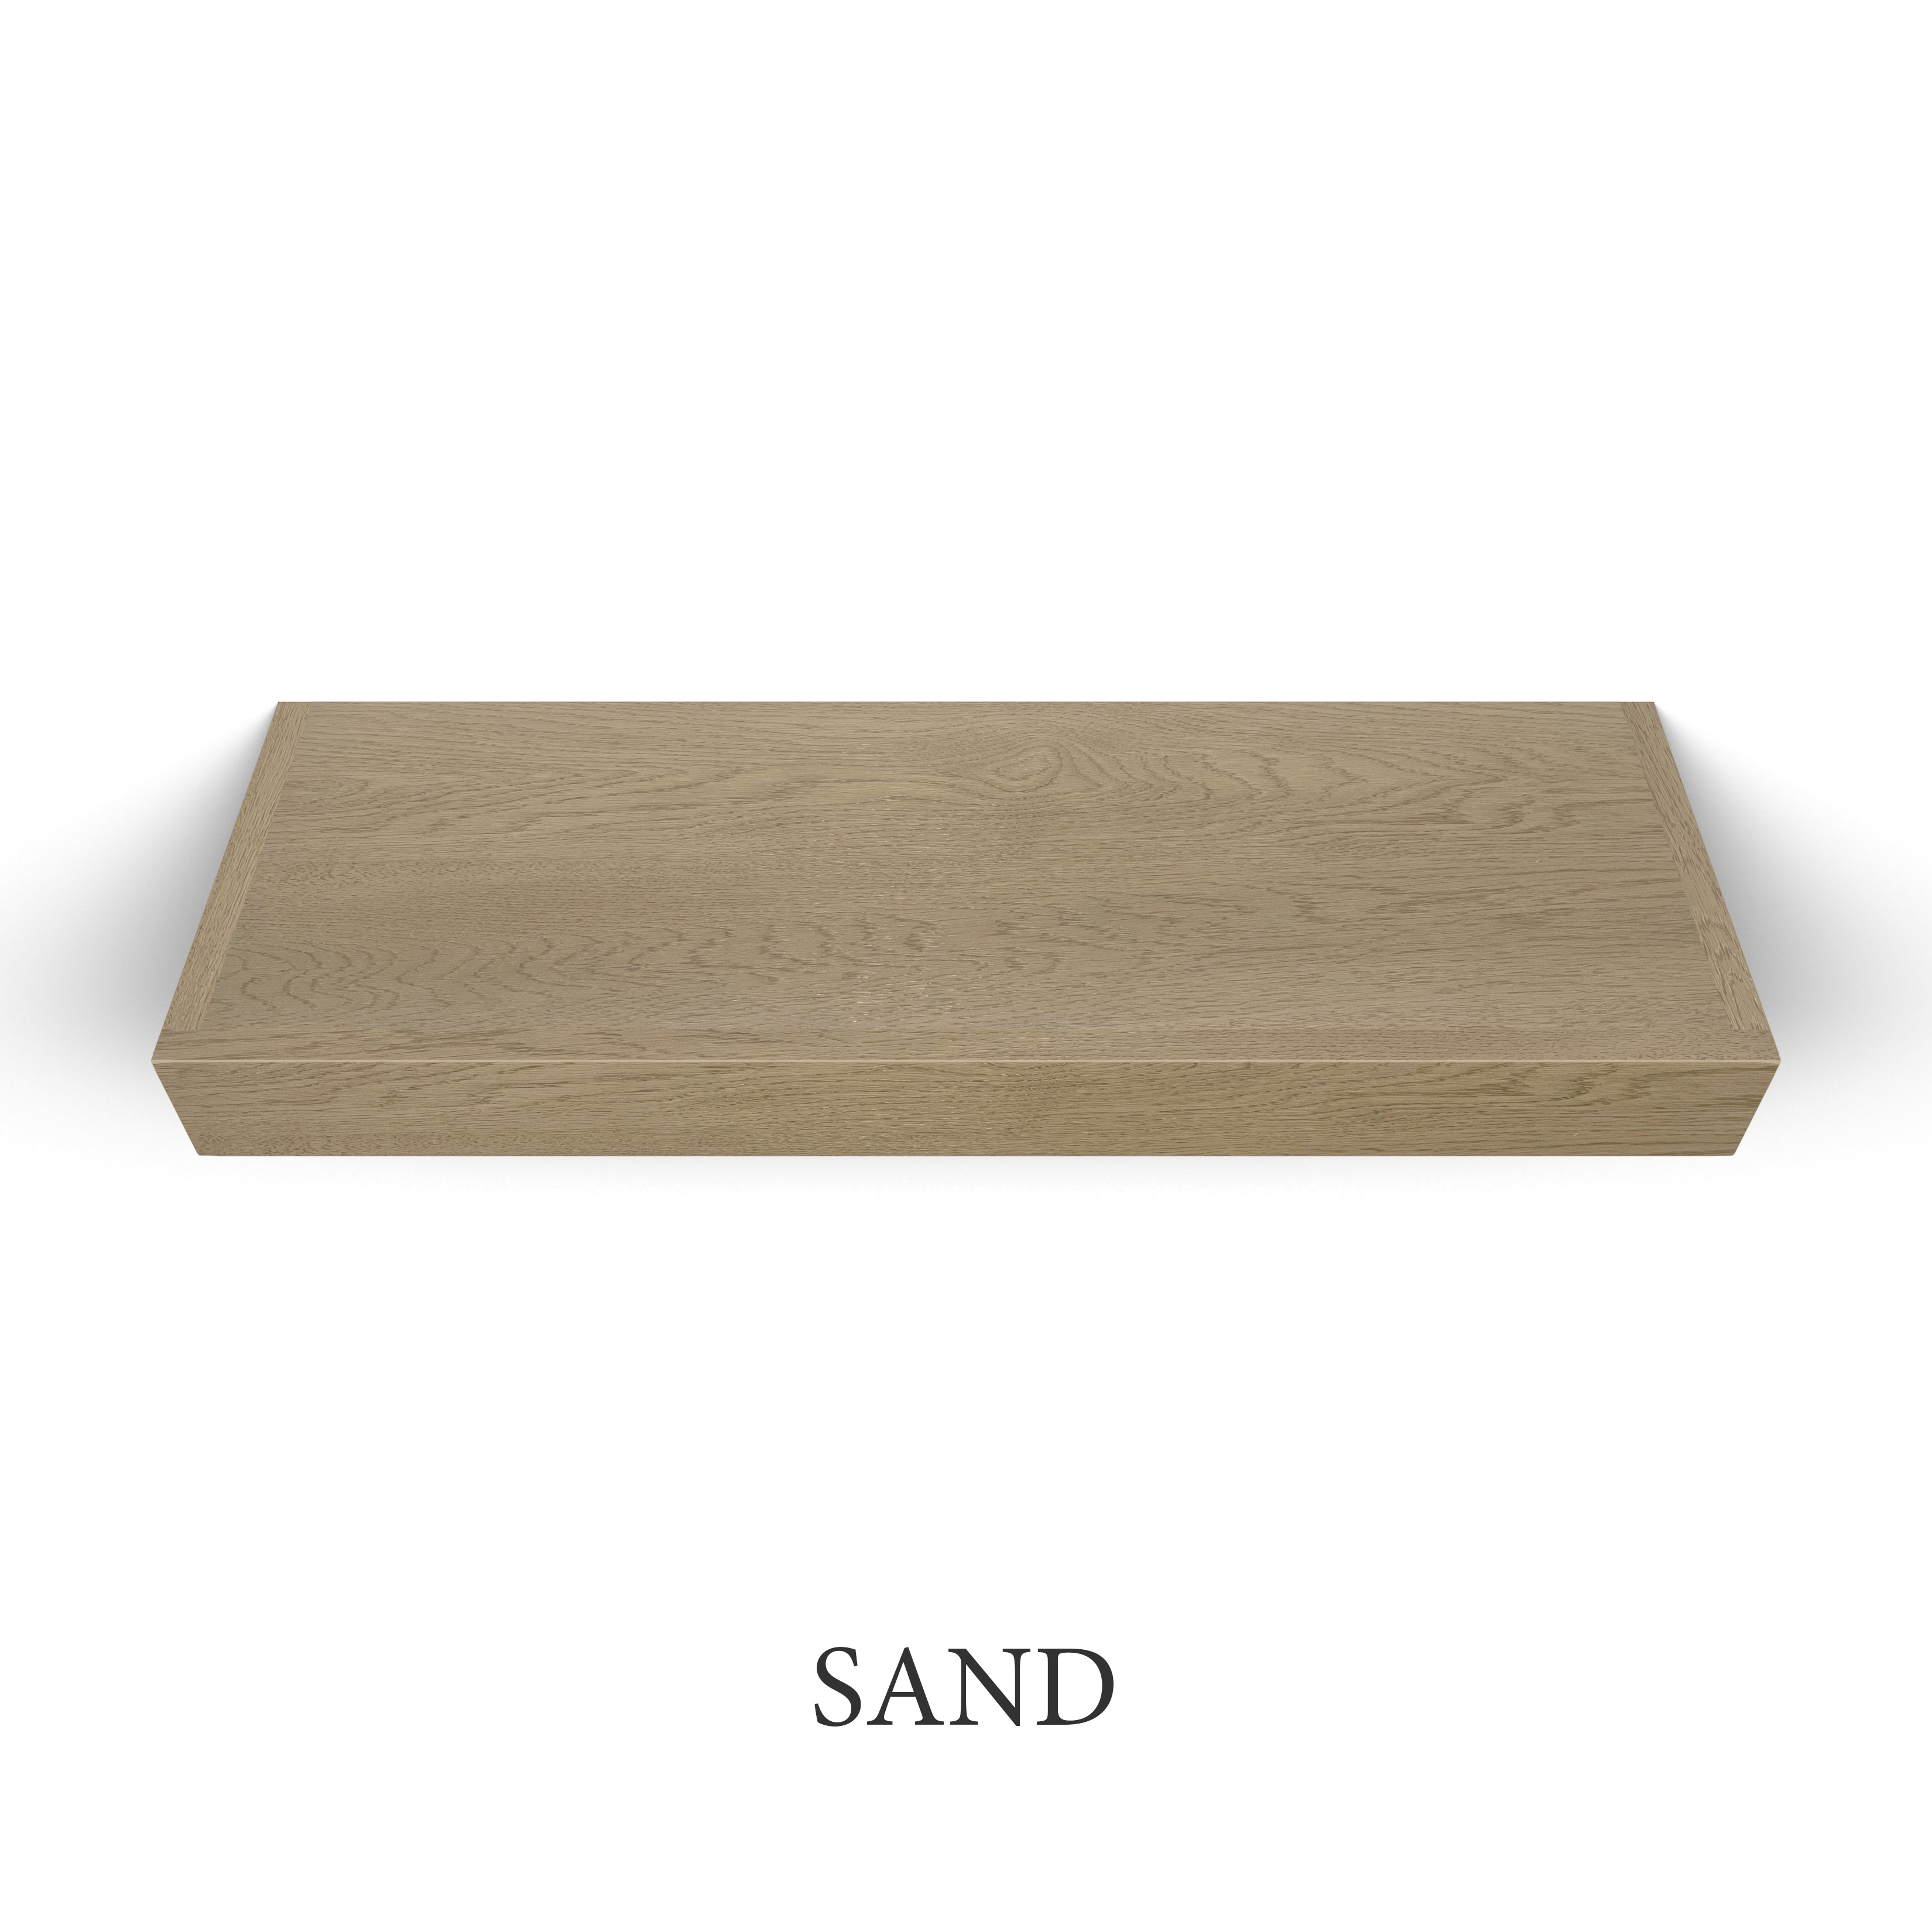 sand White Oak 3 Inch Thick Floating Shelf